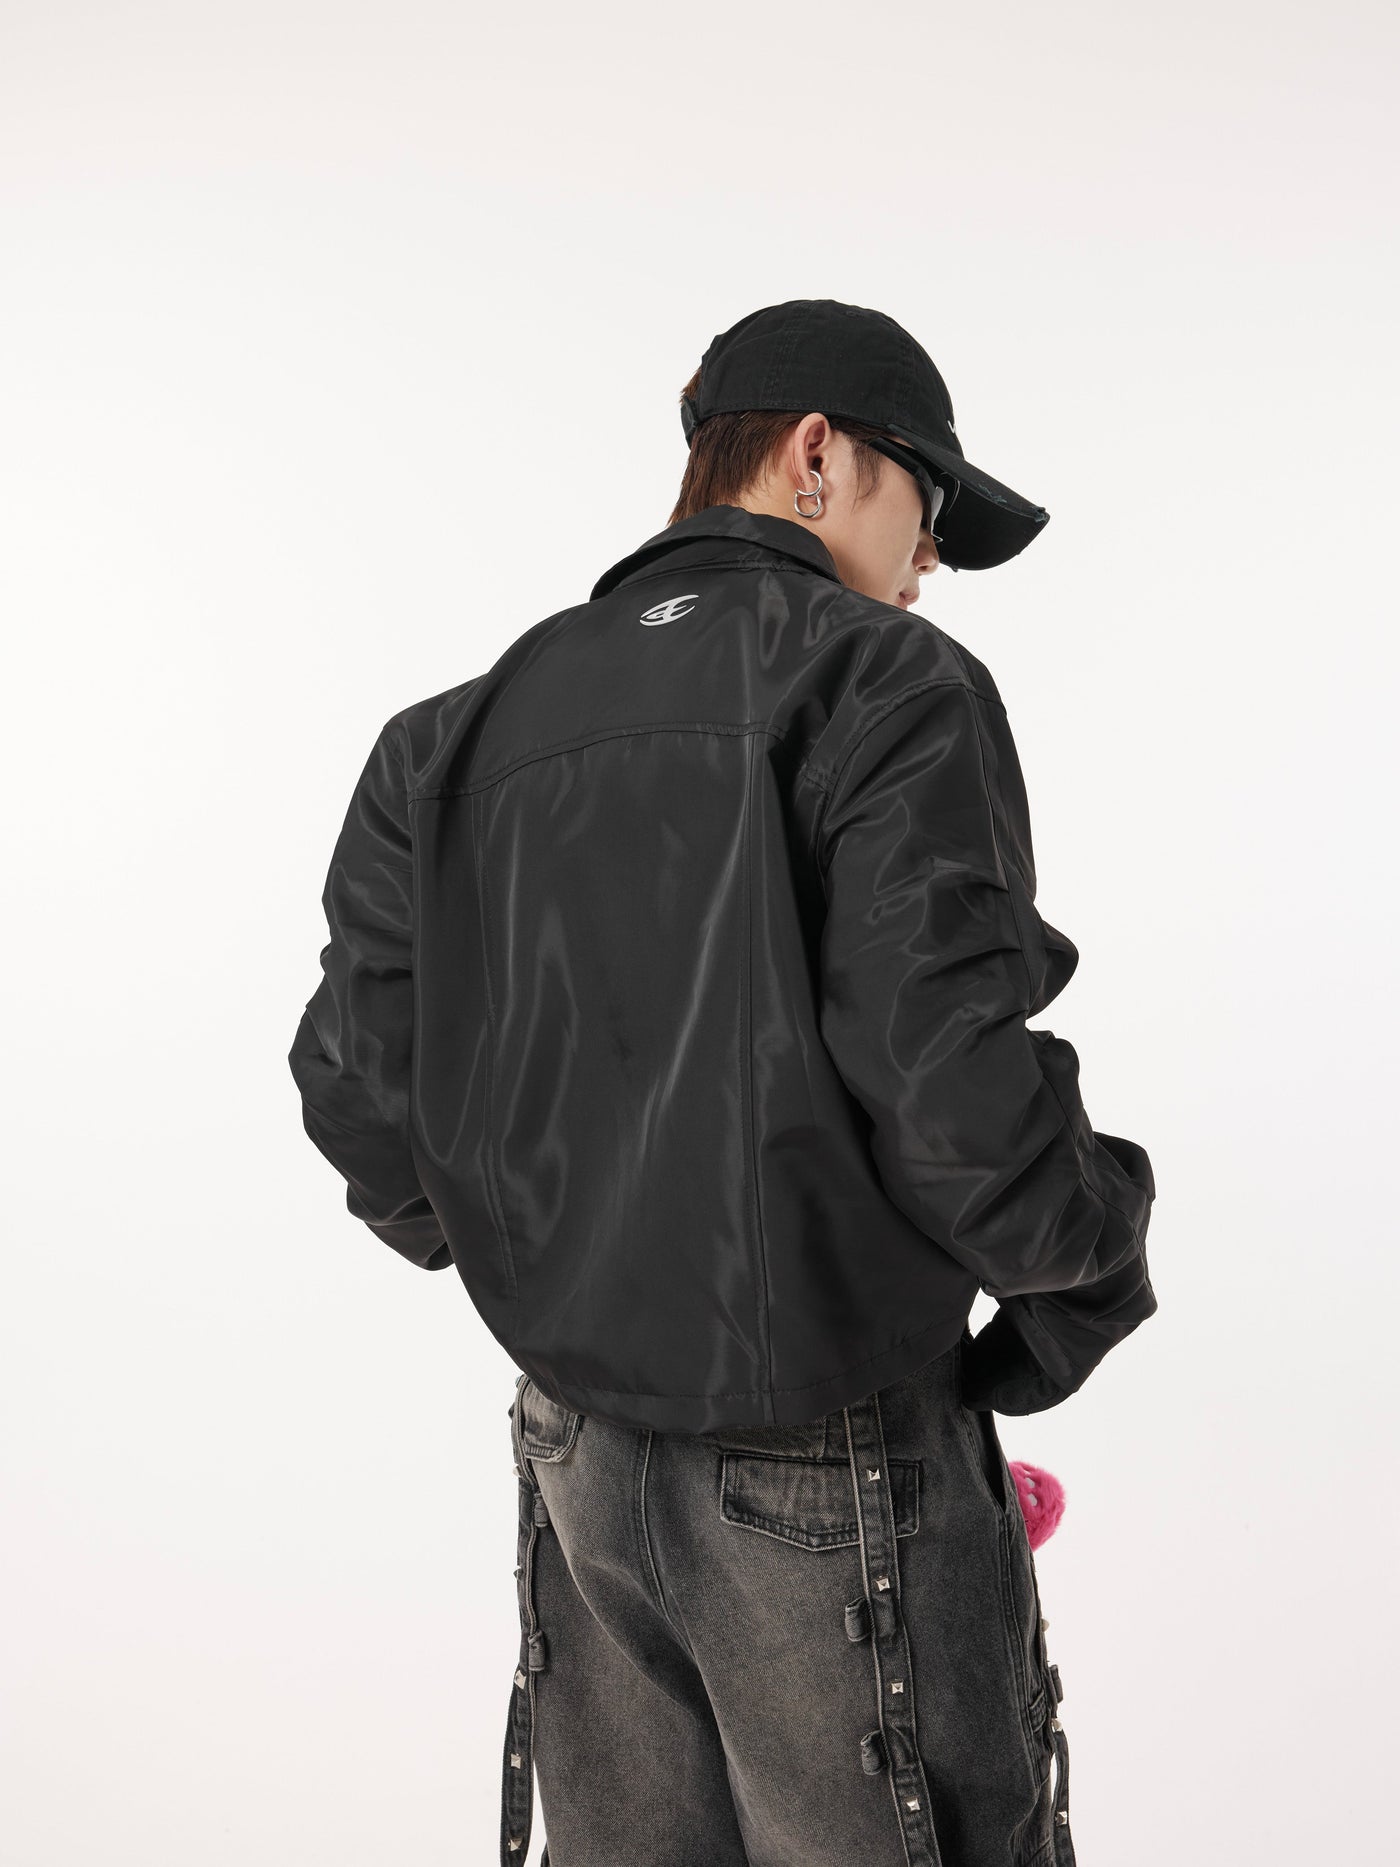 Solid Pleated Sleeves Bomber Jacket Korean Street Fashion Jacket By Dark Fog Shop Online at OH Vault